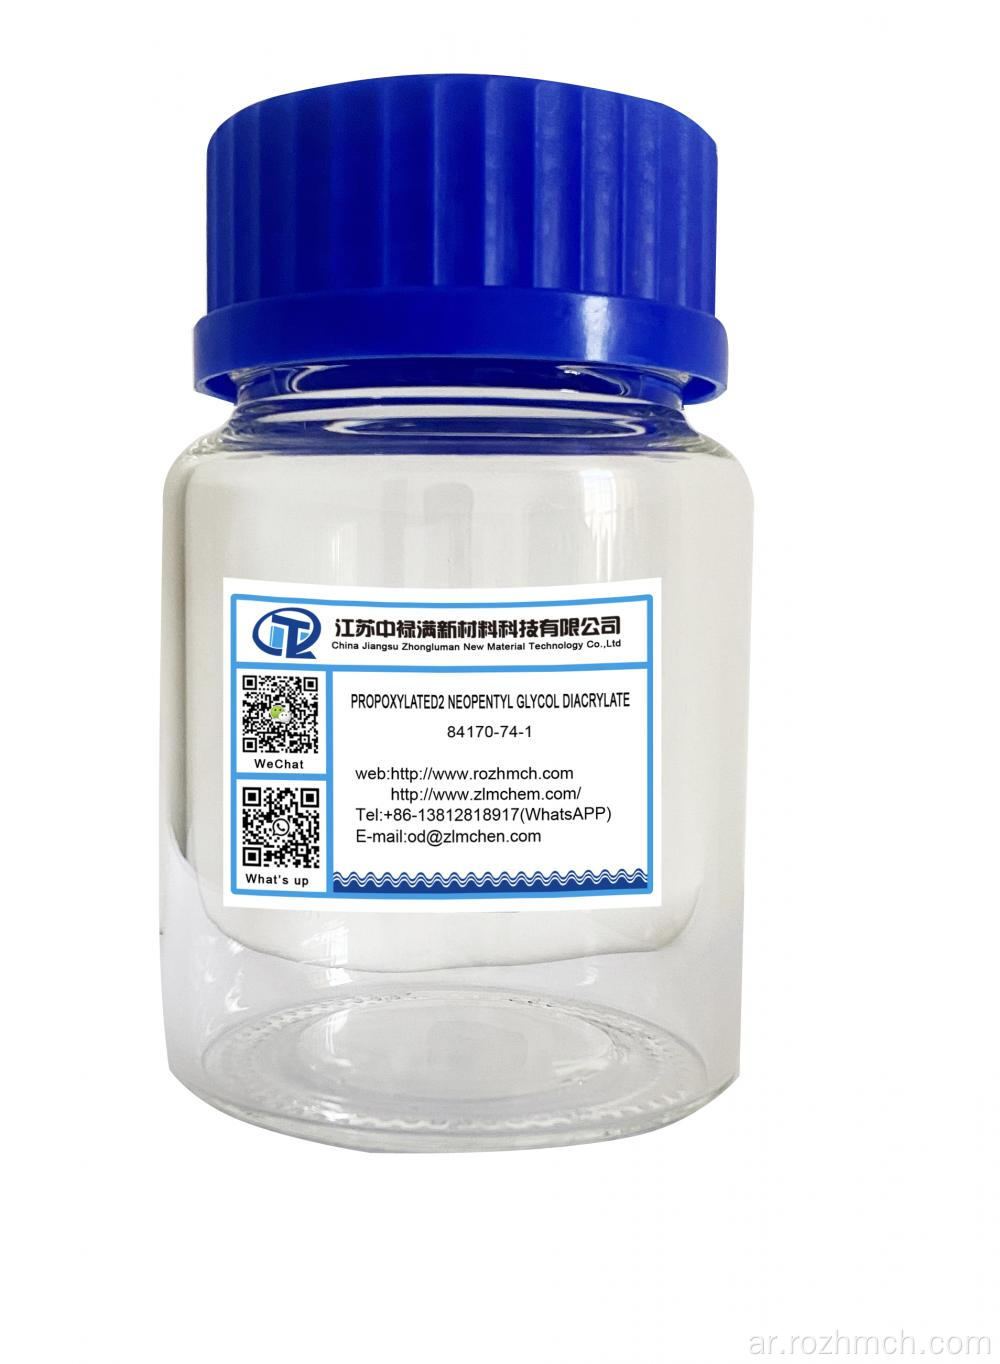 propoxylated2 neopentyl glycol diacrylate